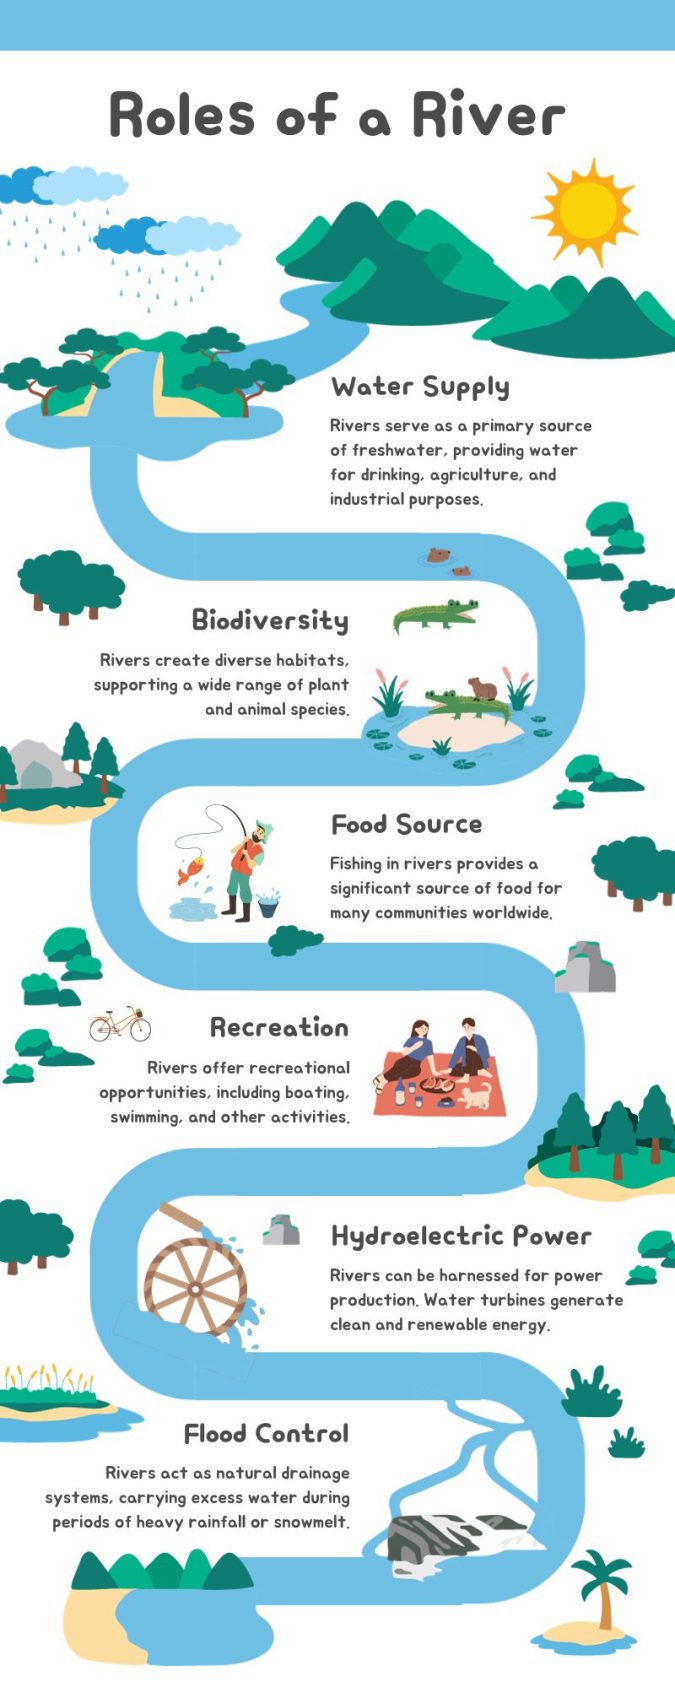 Roles of a River